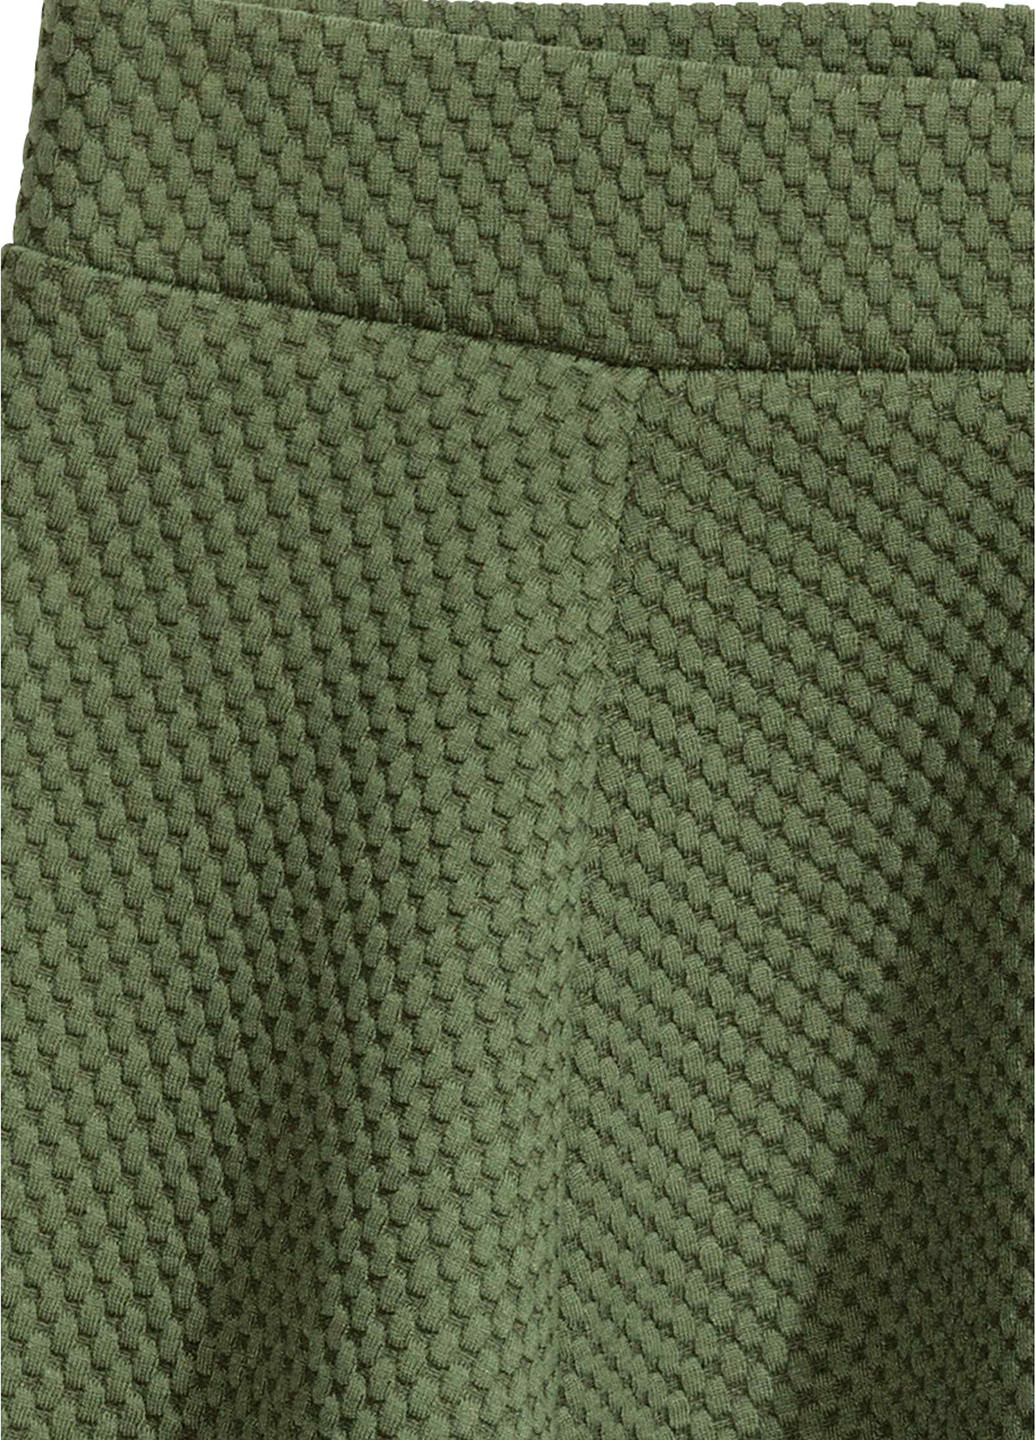 Зеленая кэжуал юбка H&M клешированная